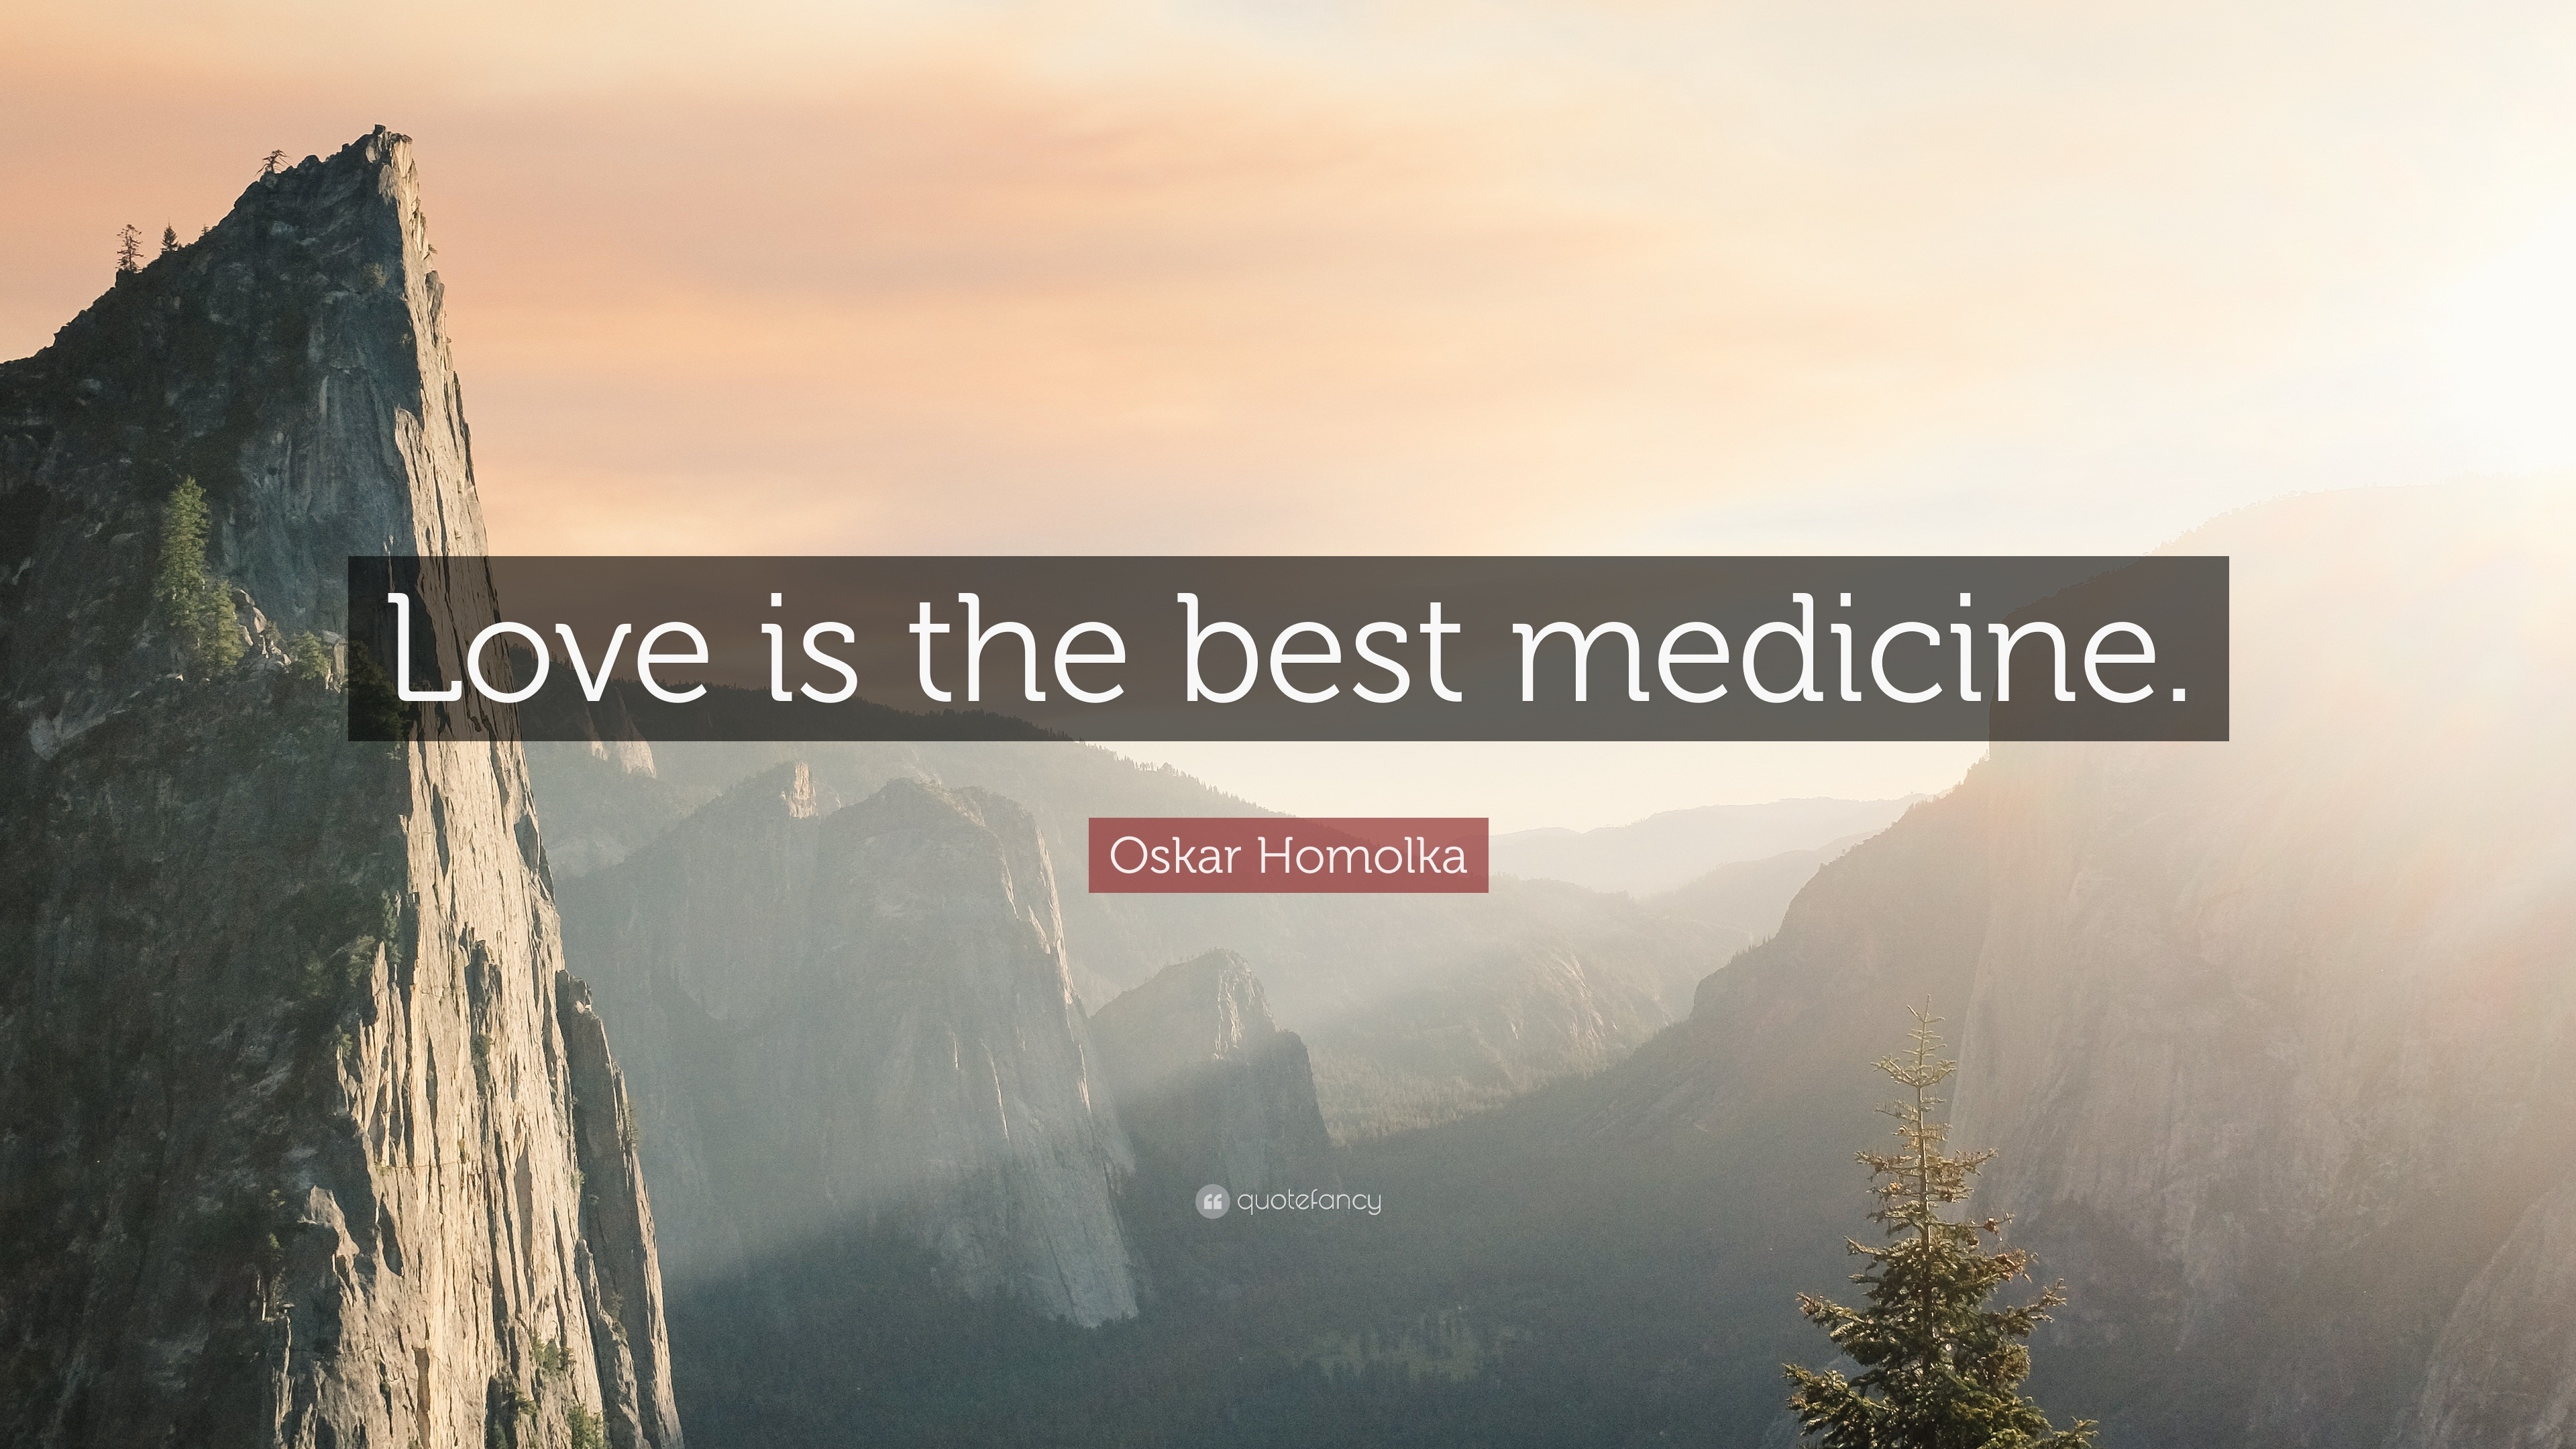 Oskar Homolka Quote “Love is the best medicine ”